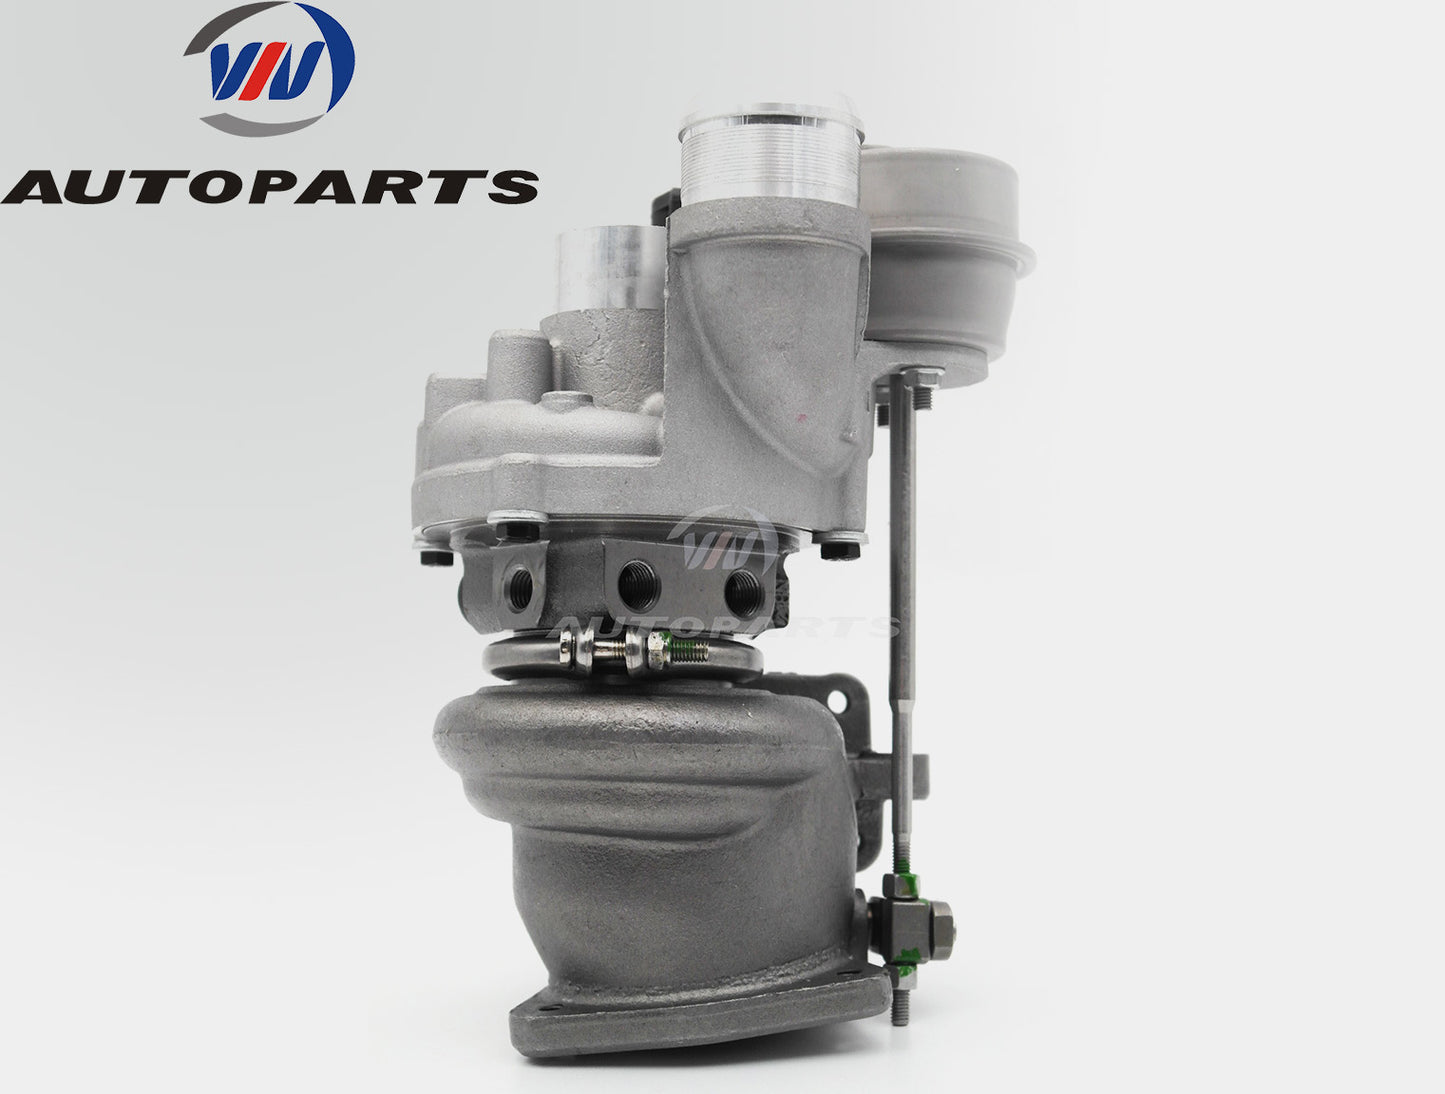 Turbocharger 53039880163 for Cooper varies 1.6L 184 horse power Gasoline Engine